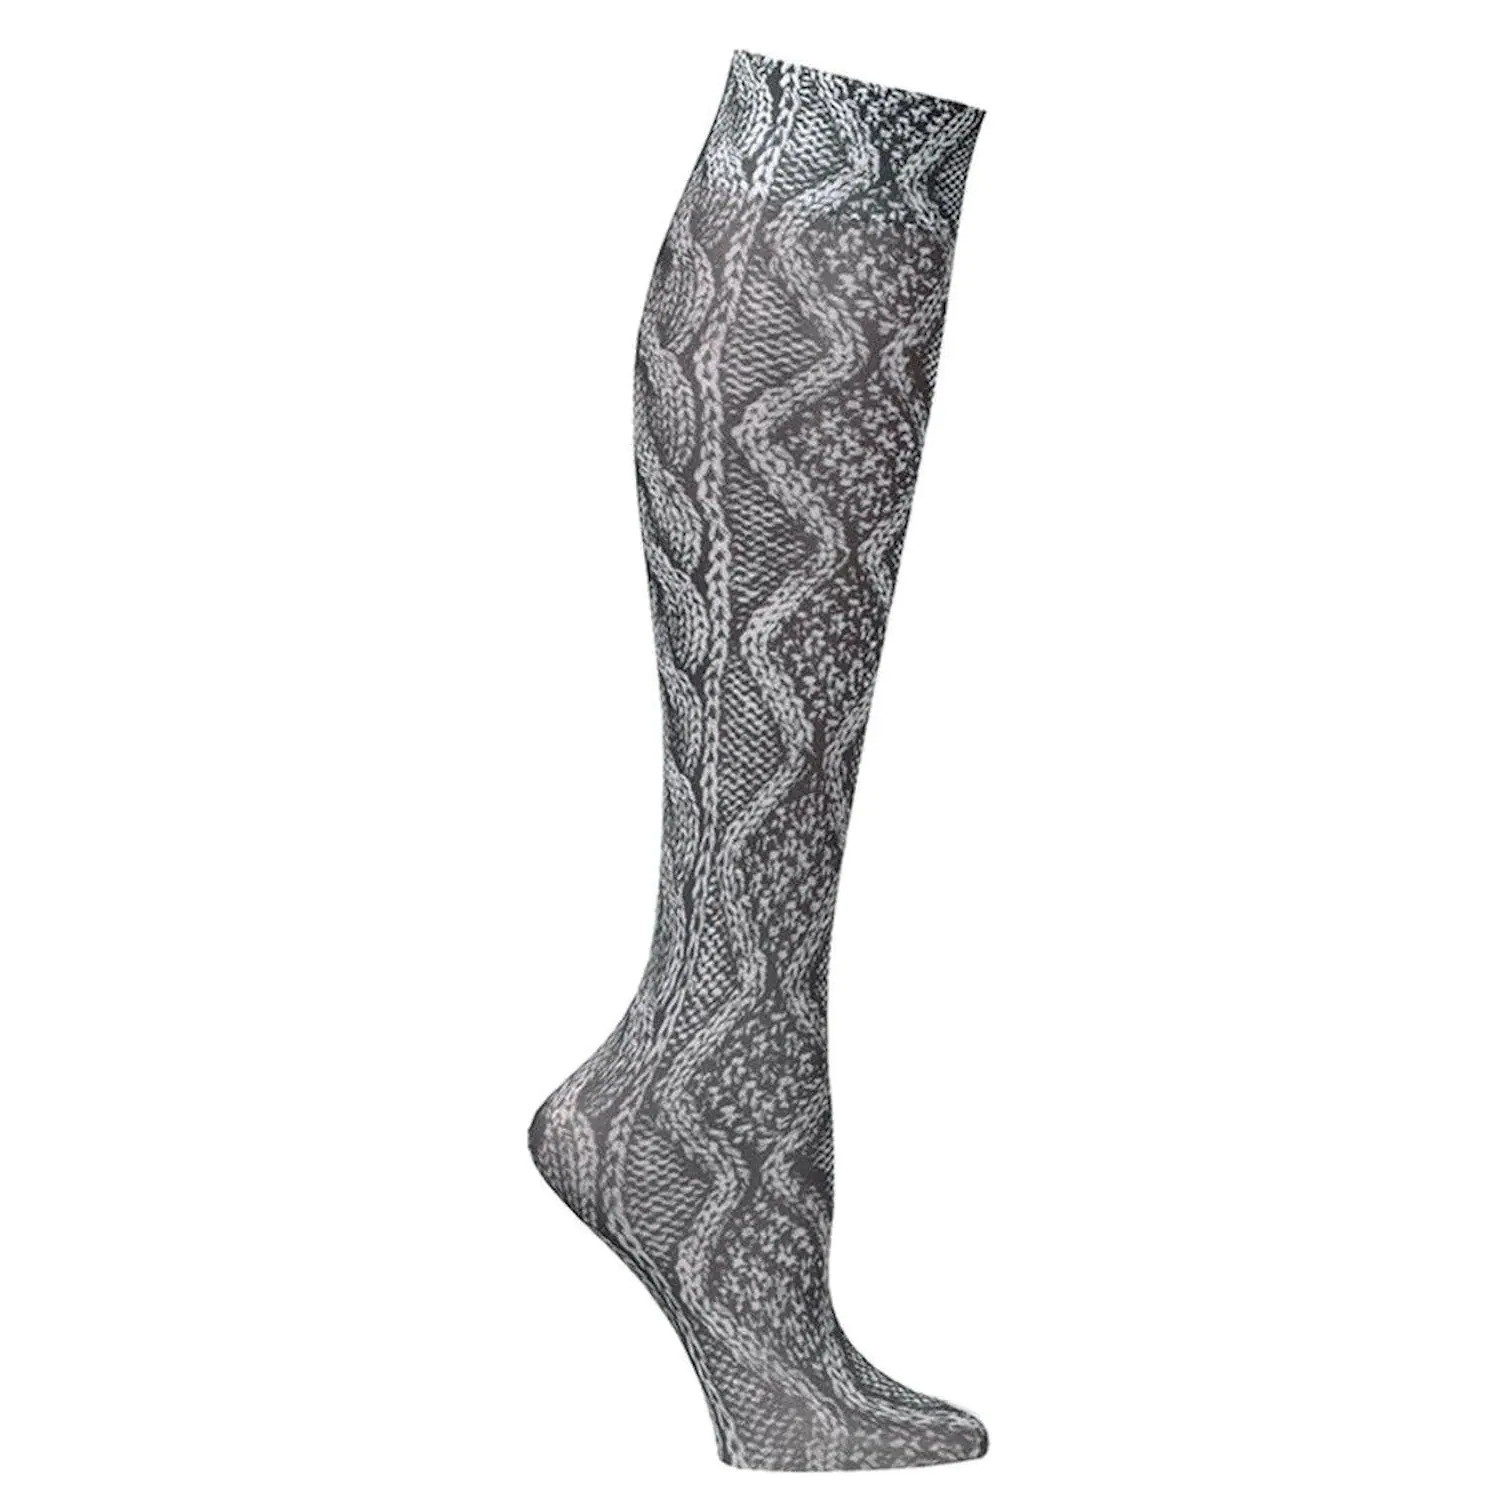 Celeste Stein Therapeutic Compression Socks, Black Vogue, 8-15 mmhg, .6  Ounce, 0.6 Ounce 